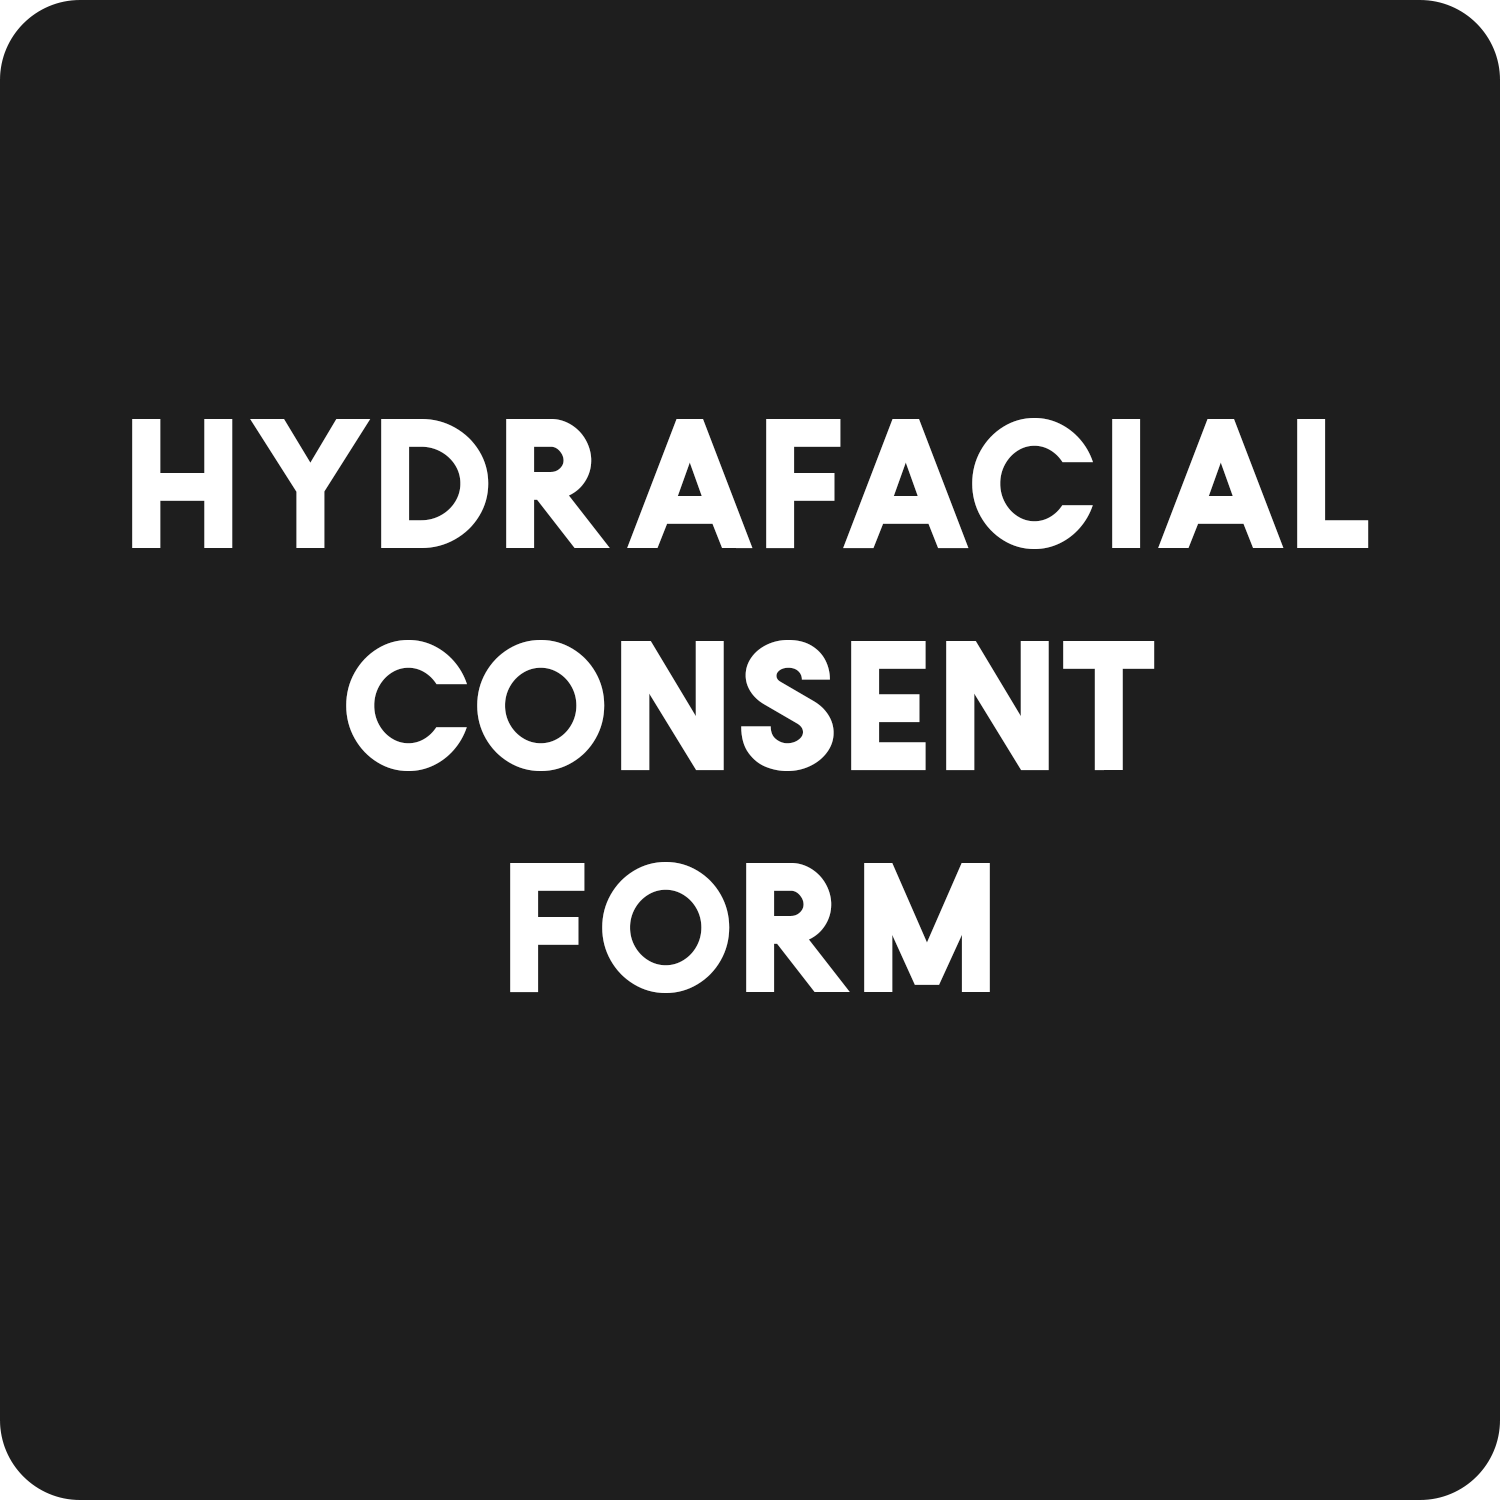 Hydrafacial Consent Form